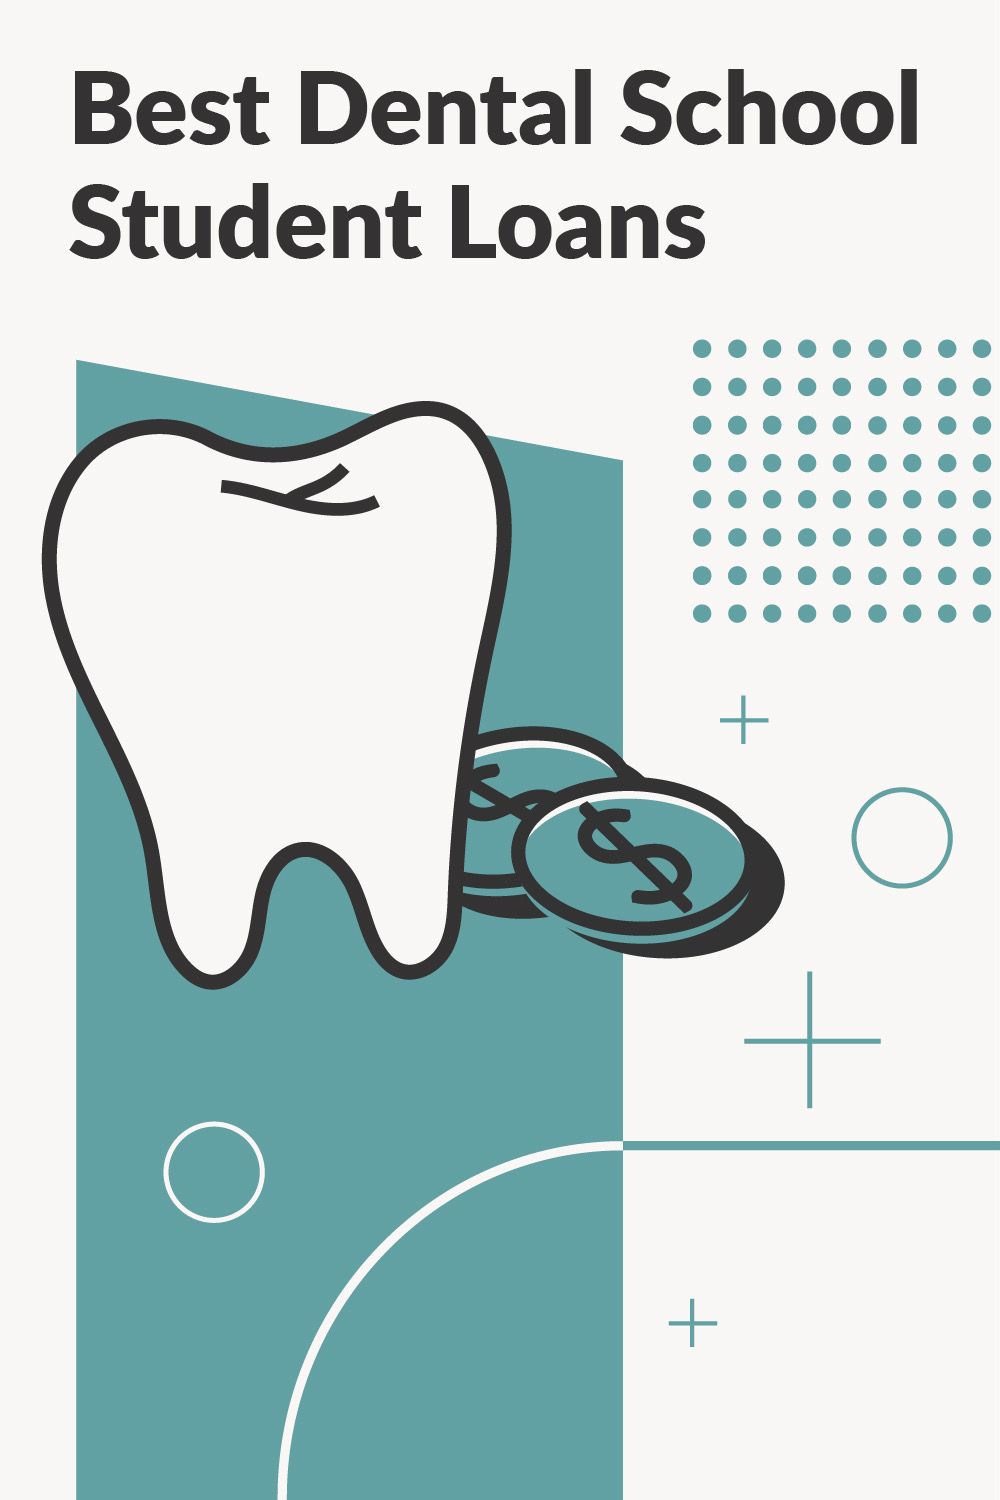 Best Dental School Student Loans Pinterest Image